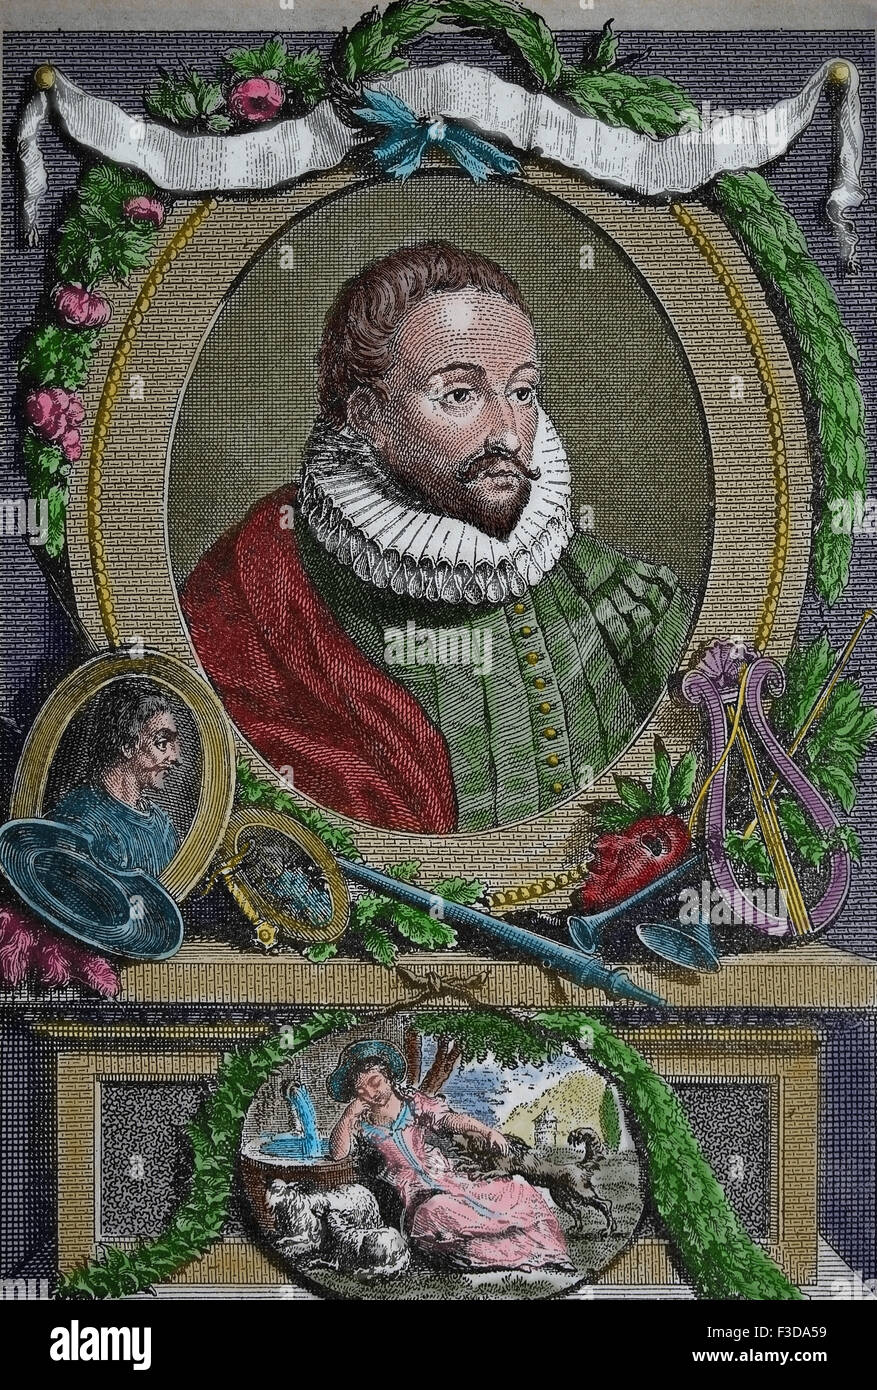 Miguel de Cervantes (1547-1616). Spanish writer. Engraving. 19th century. Color. Stock Photo